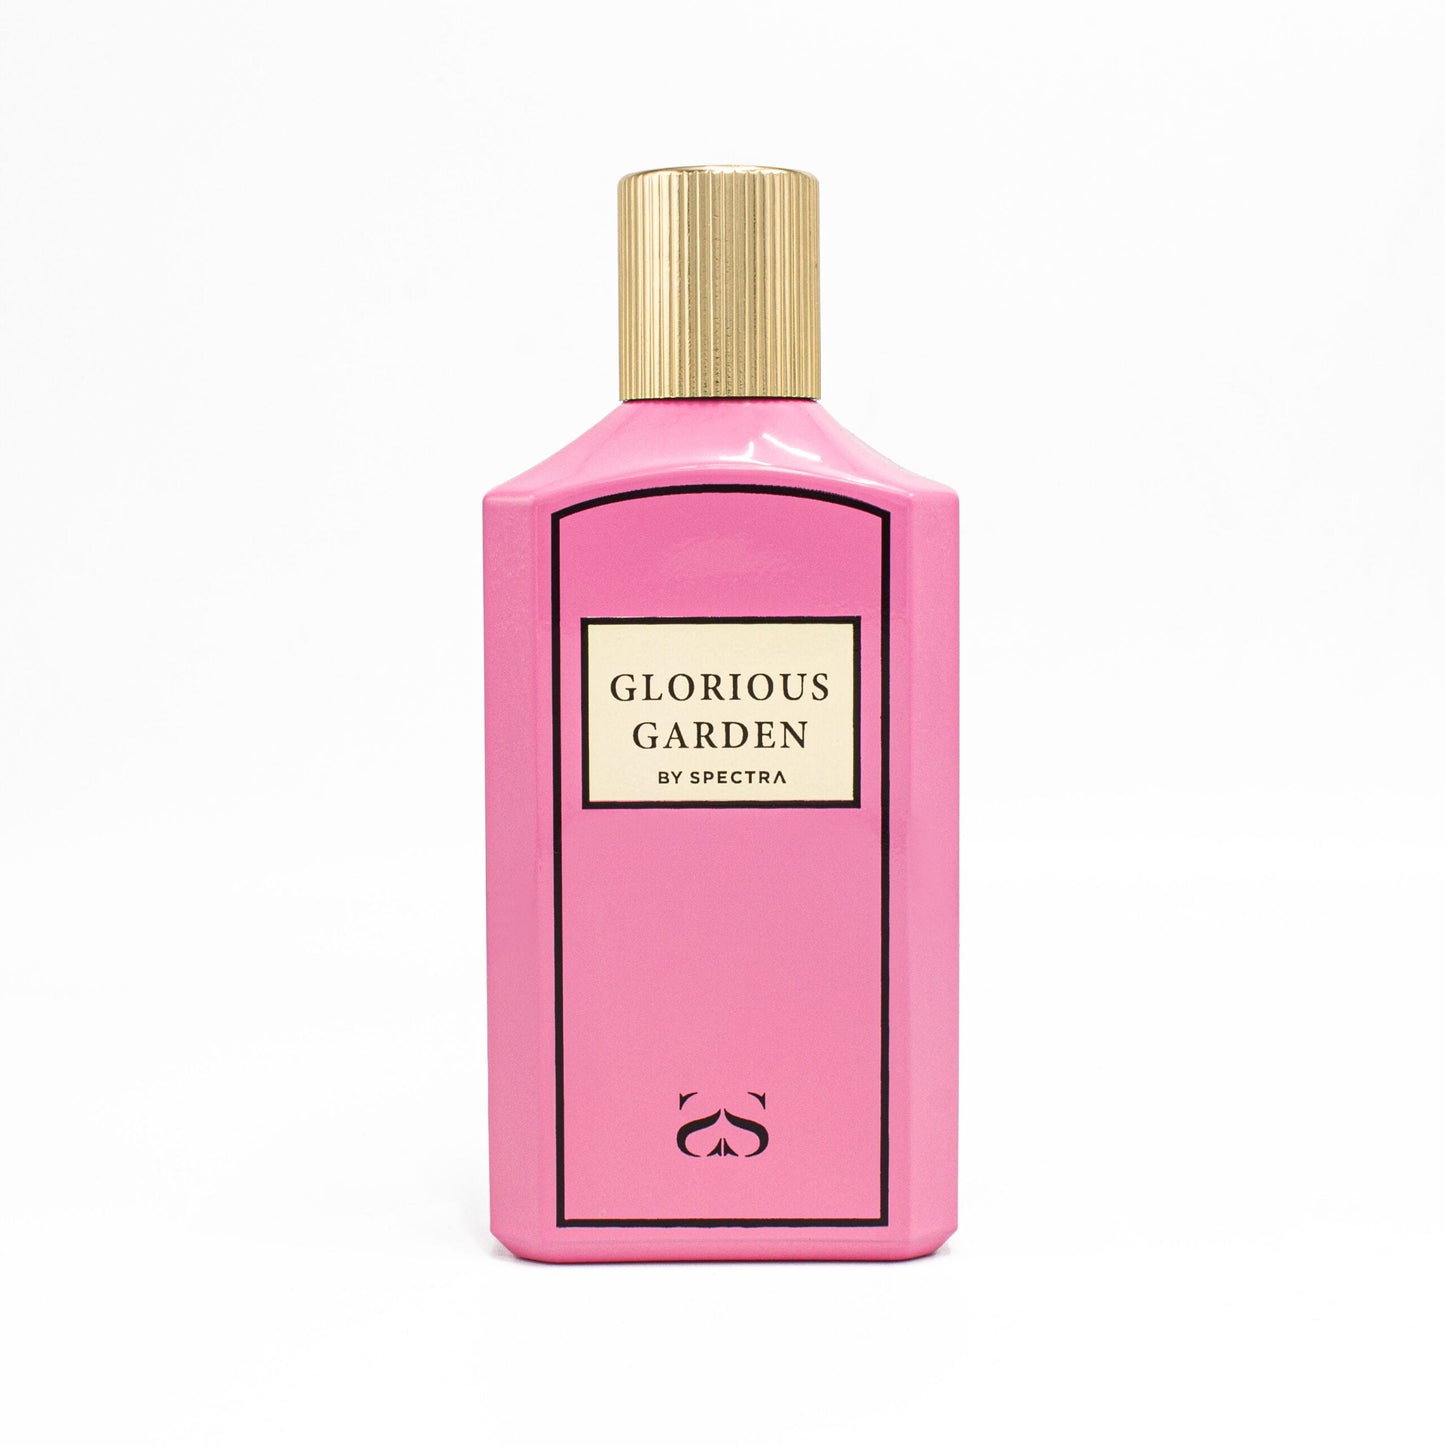 Spectra 222 Glorious Garden Eau De Parfum For Women – 100ml